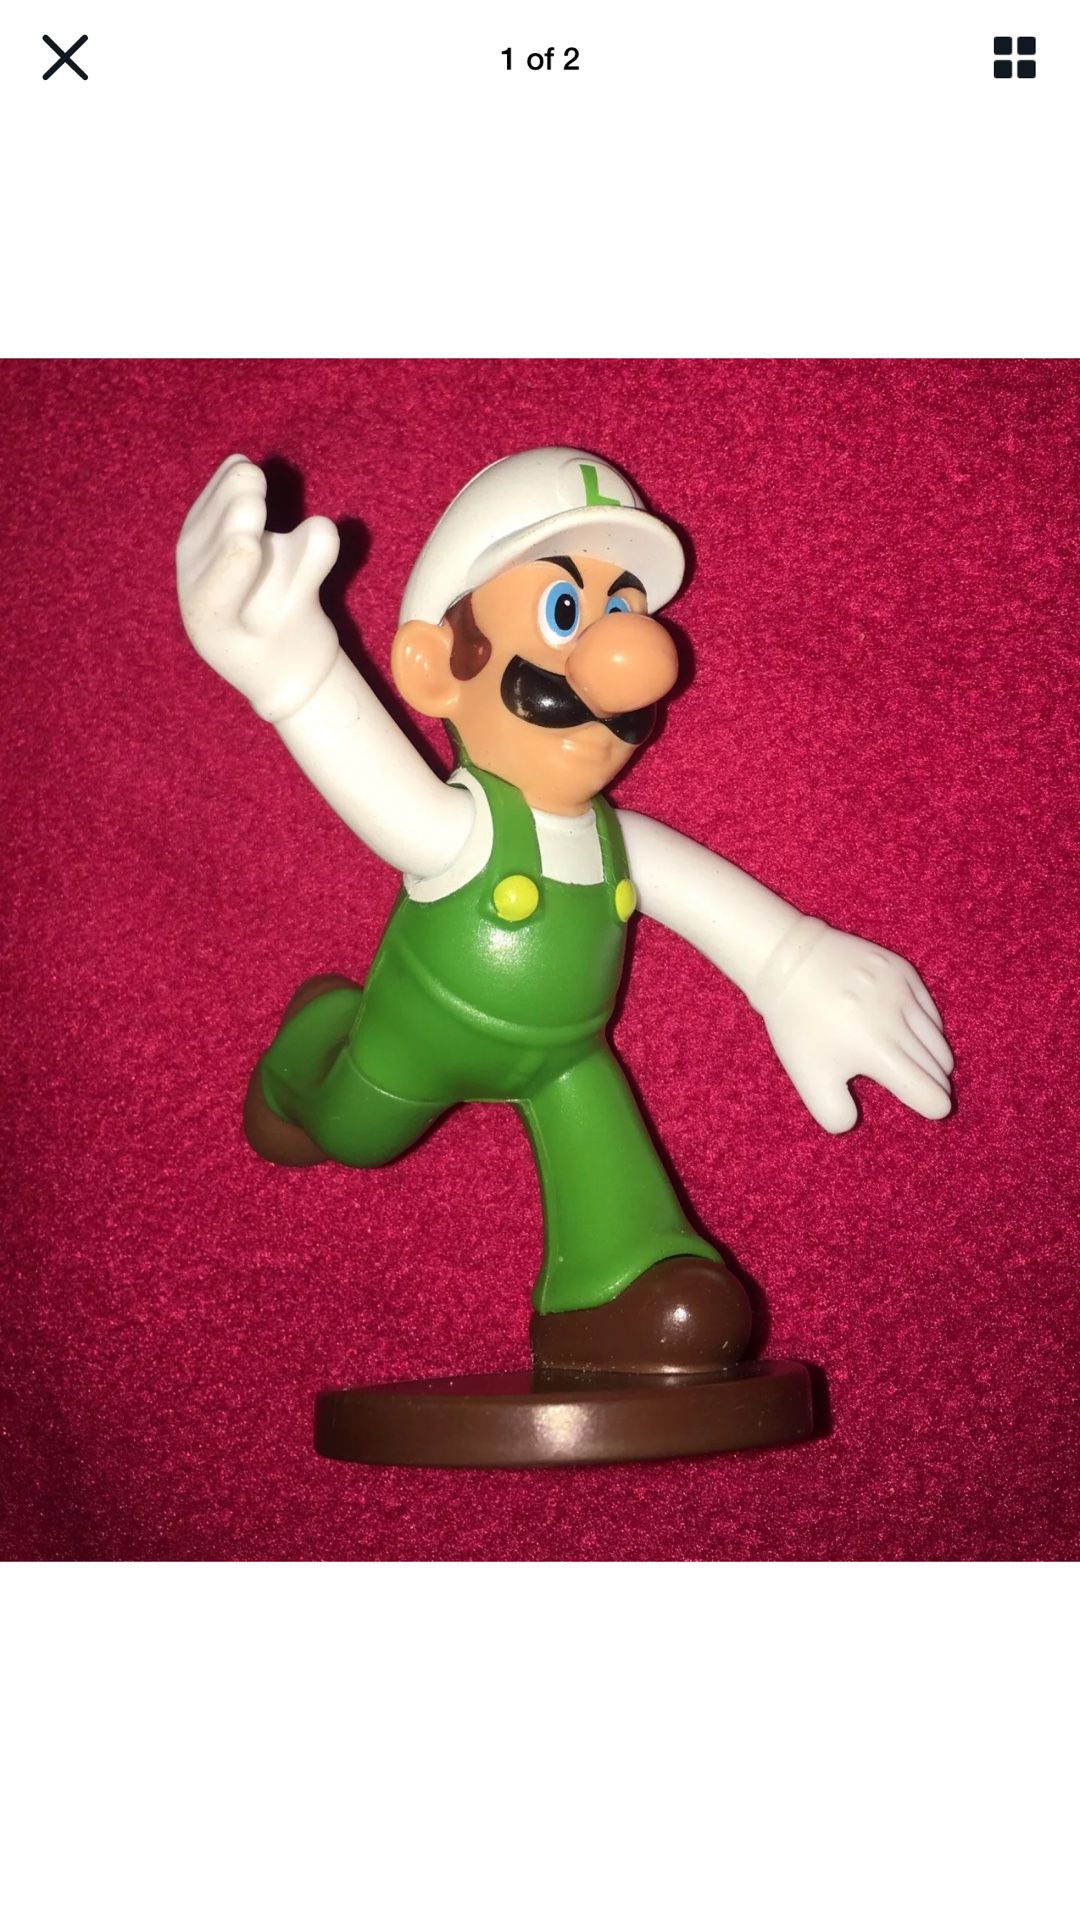 Super Mario Luigi Nintendo rare action figure statue vintage